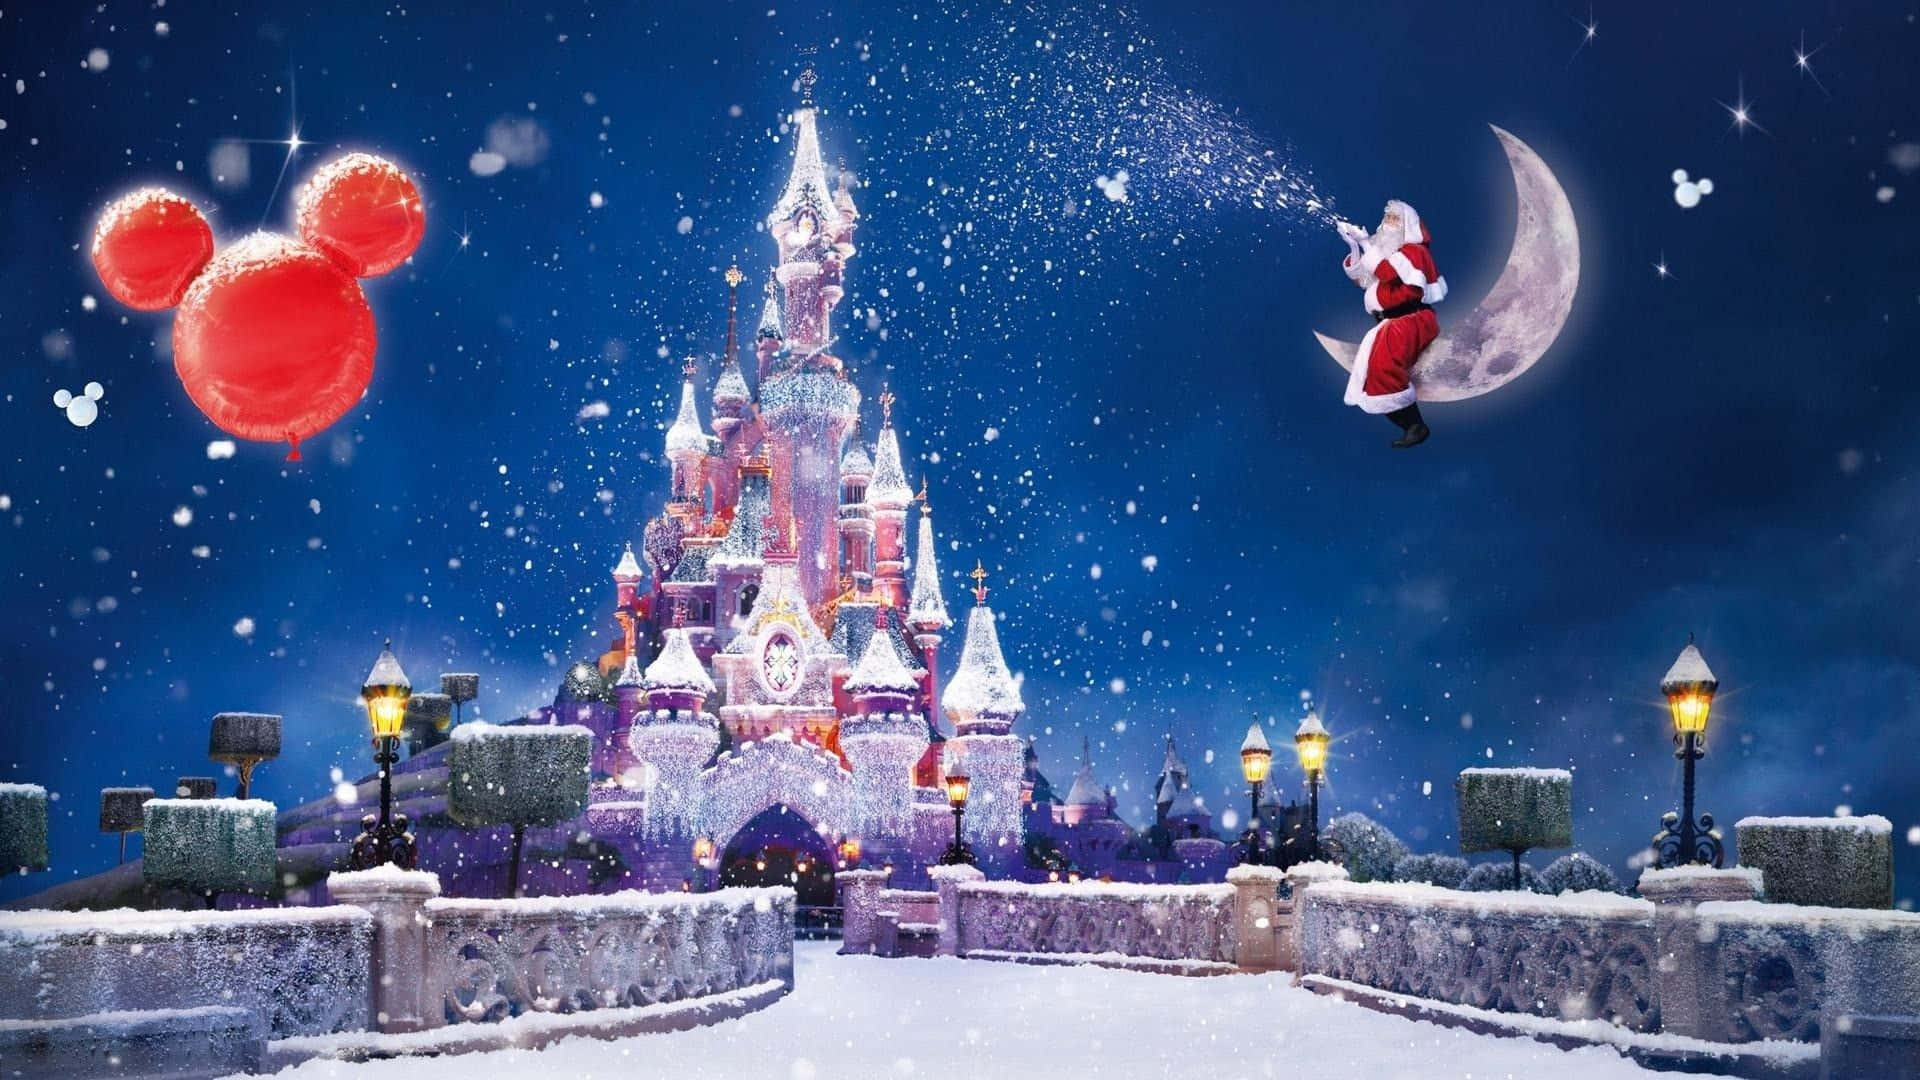 Magical Winter Wonderland on Christmas Eve